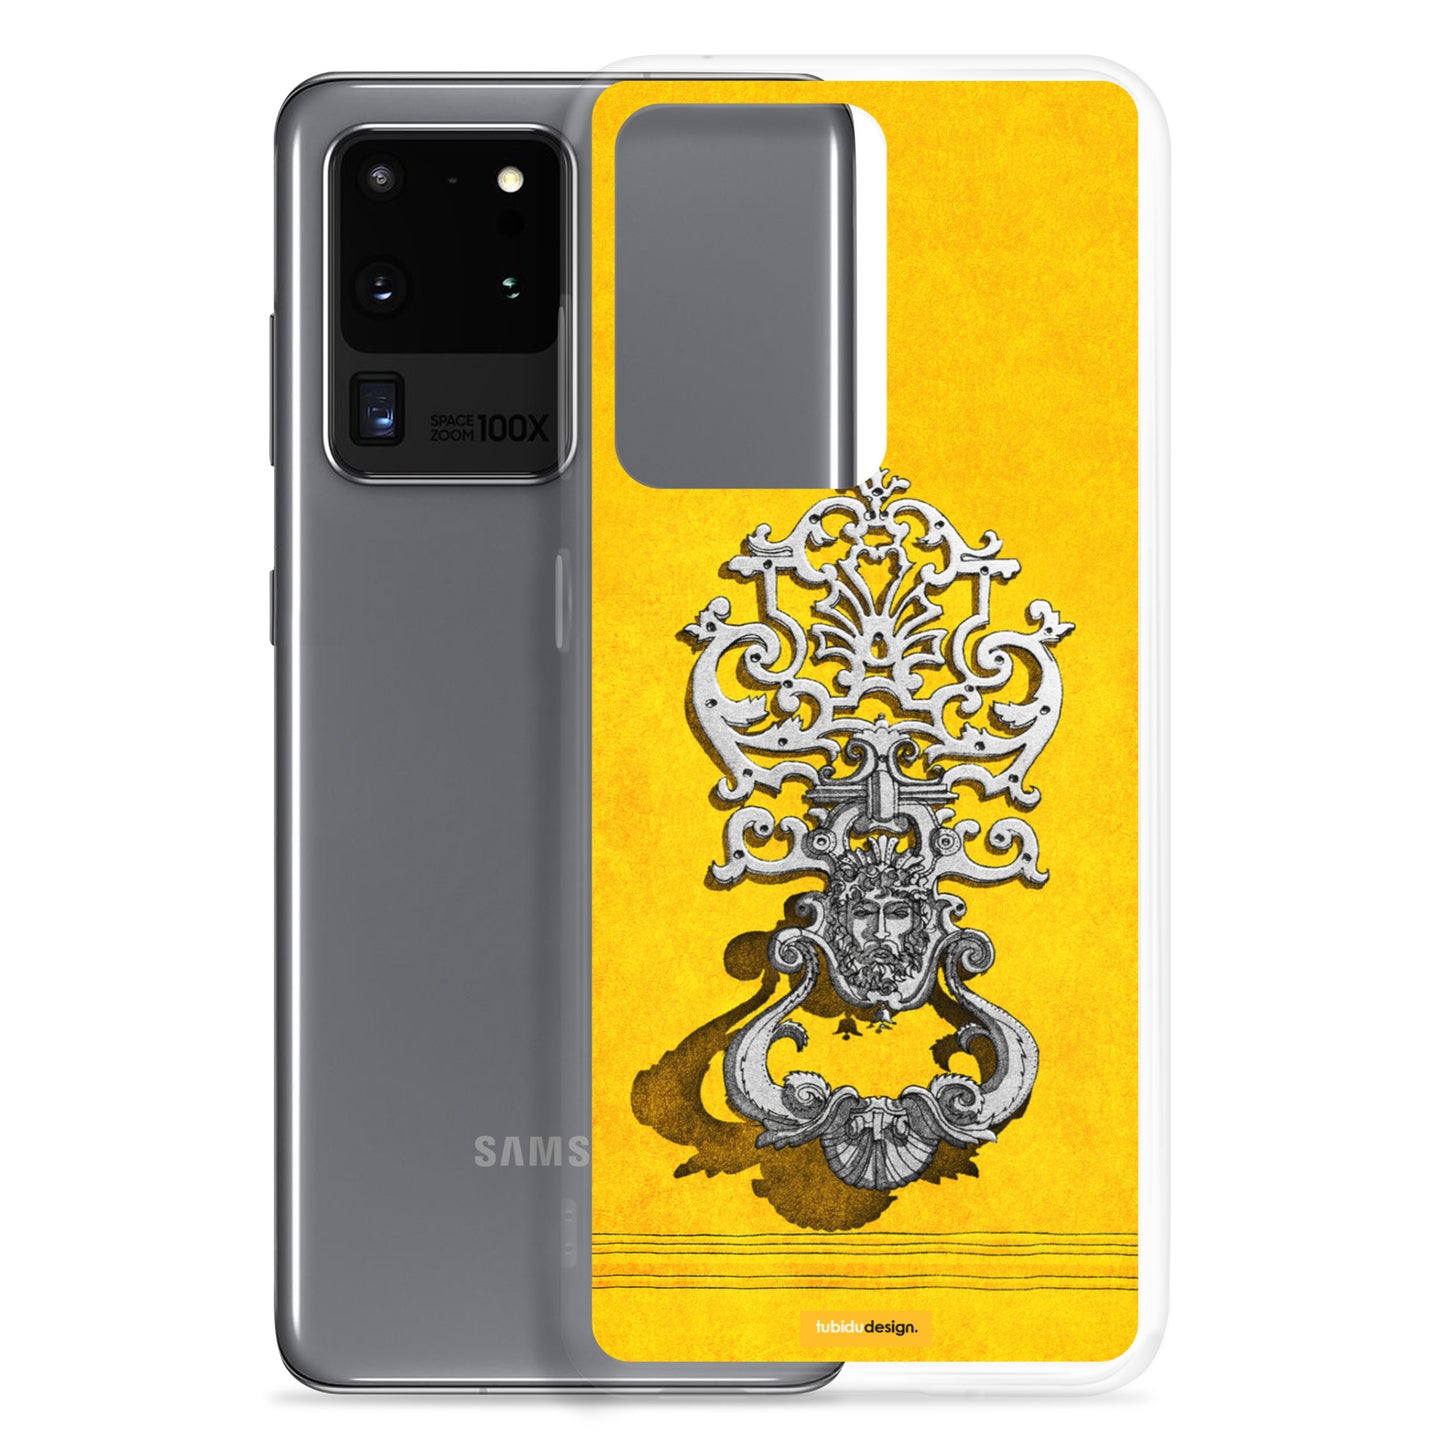 Old door handle - Illustrated Samsung Phone Case